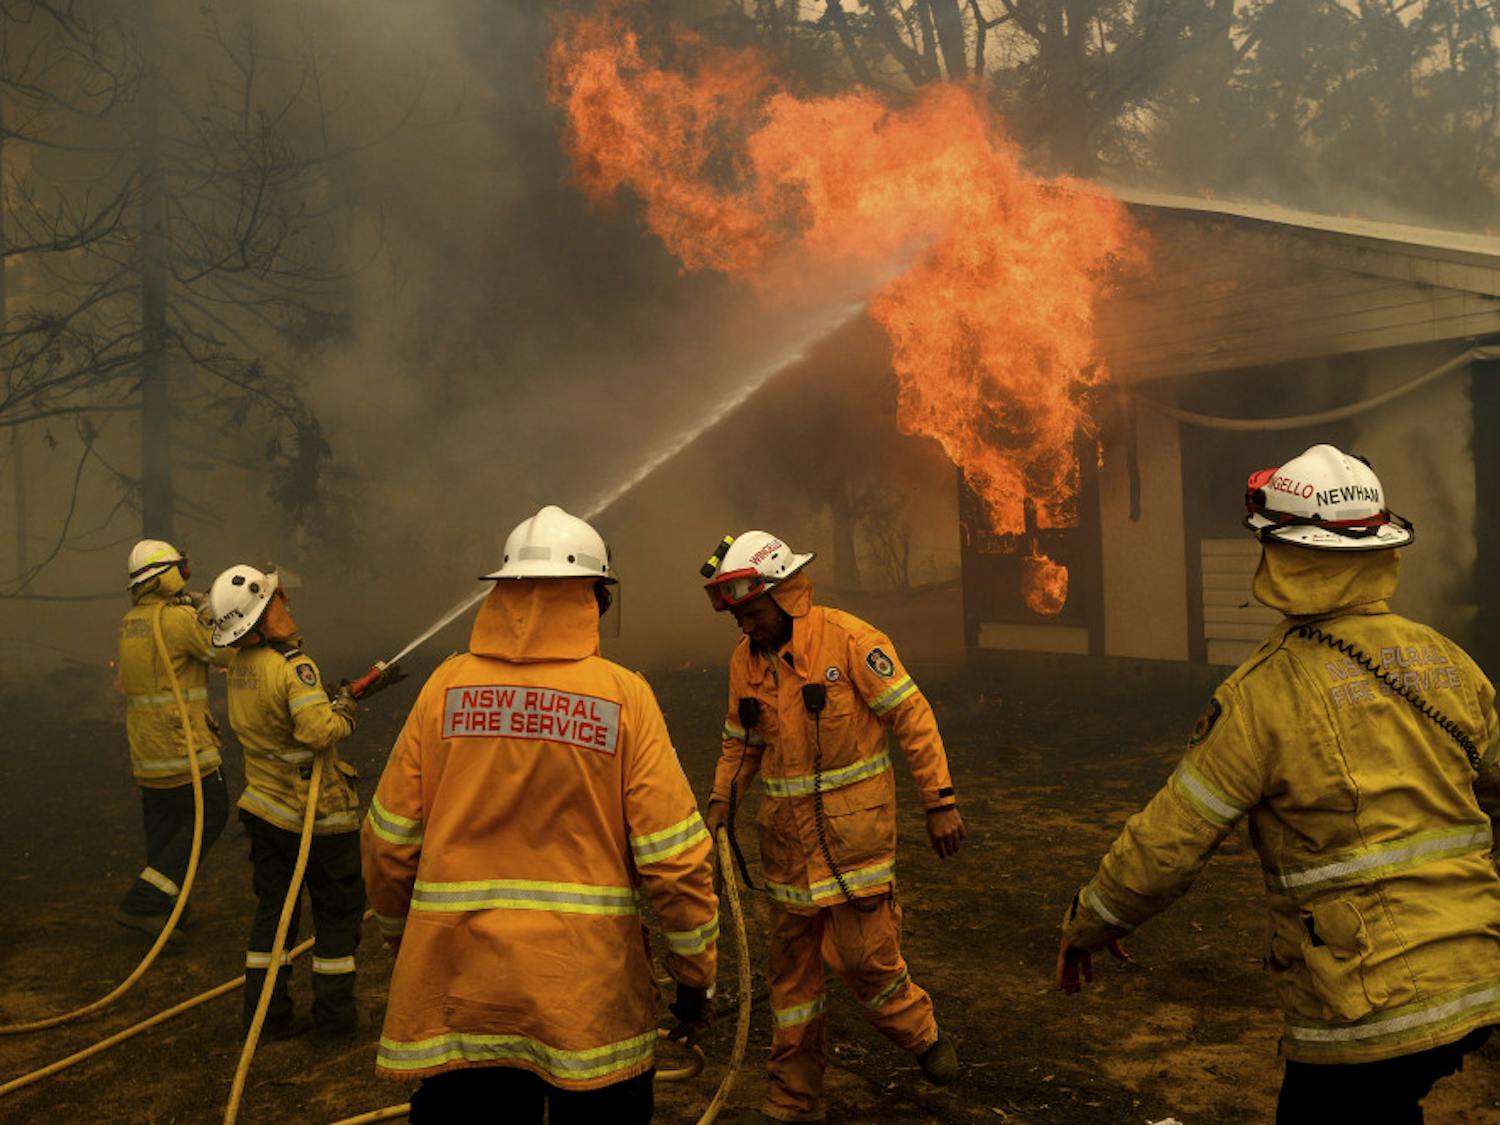 Firefighters battle the Morton Fire as it burns a home near Bundanoon, New South Wales, Australia, on Thursday, Jan. 23, 2020. (AP Photo/Noah Berger)